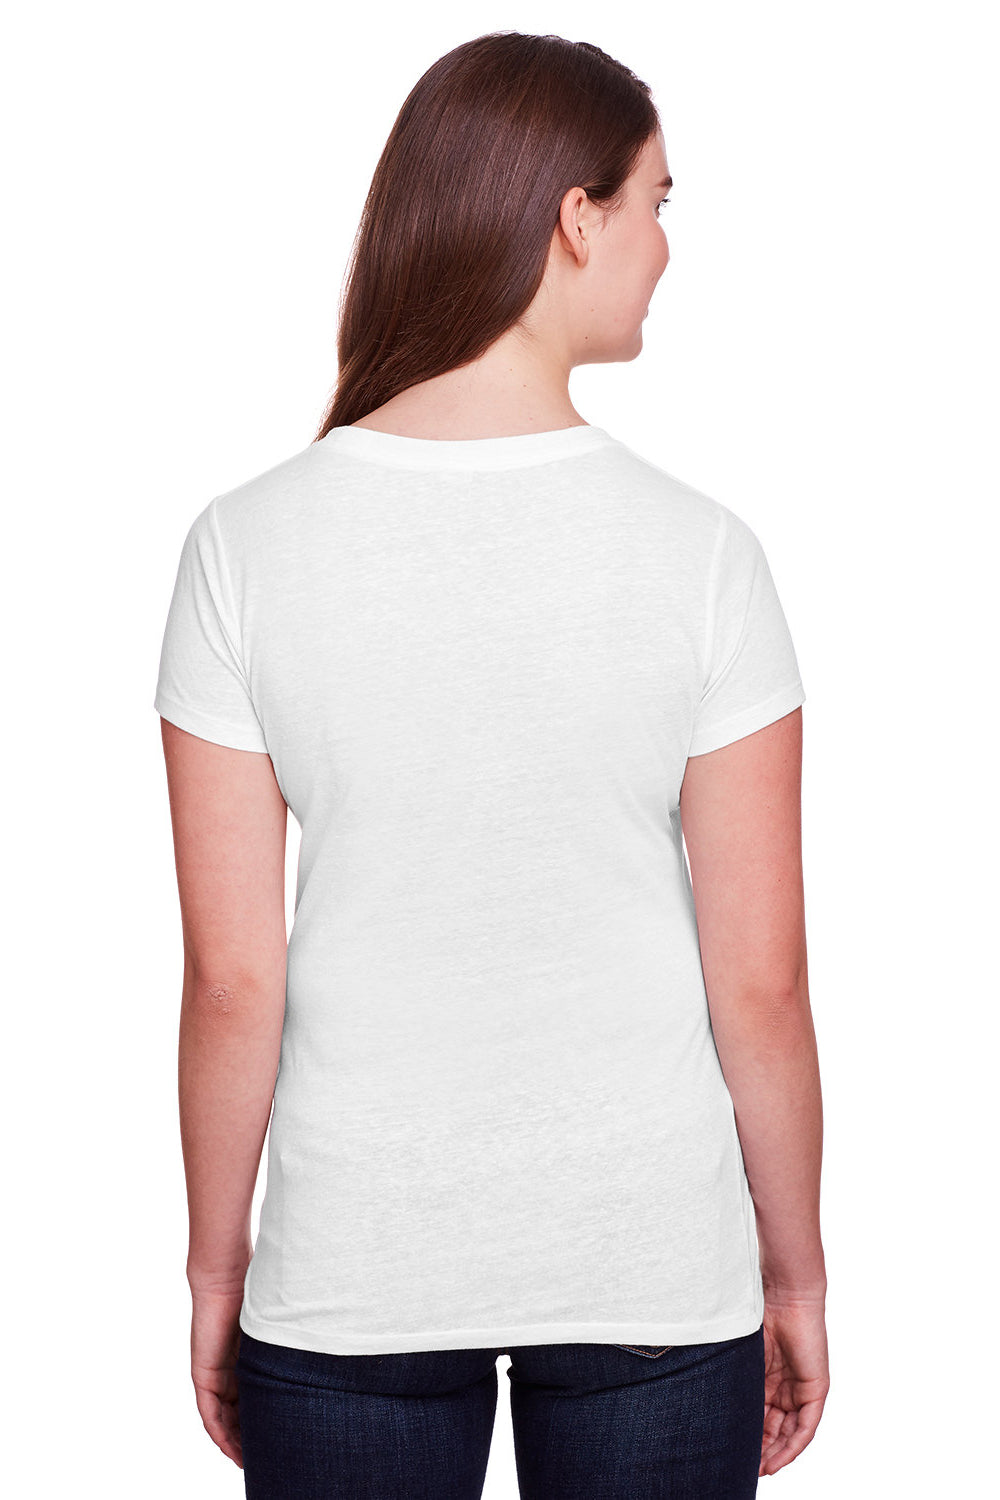 Threadfast Apparel 202A Womens Short Sleeve Crewneck T-Shirt Solid White Back